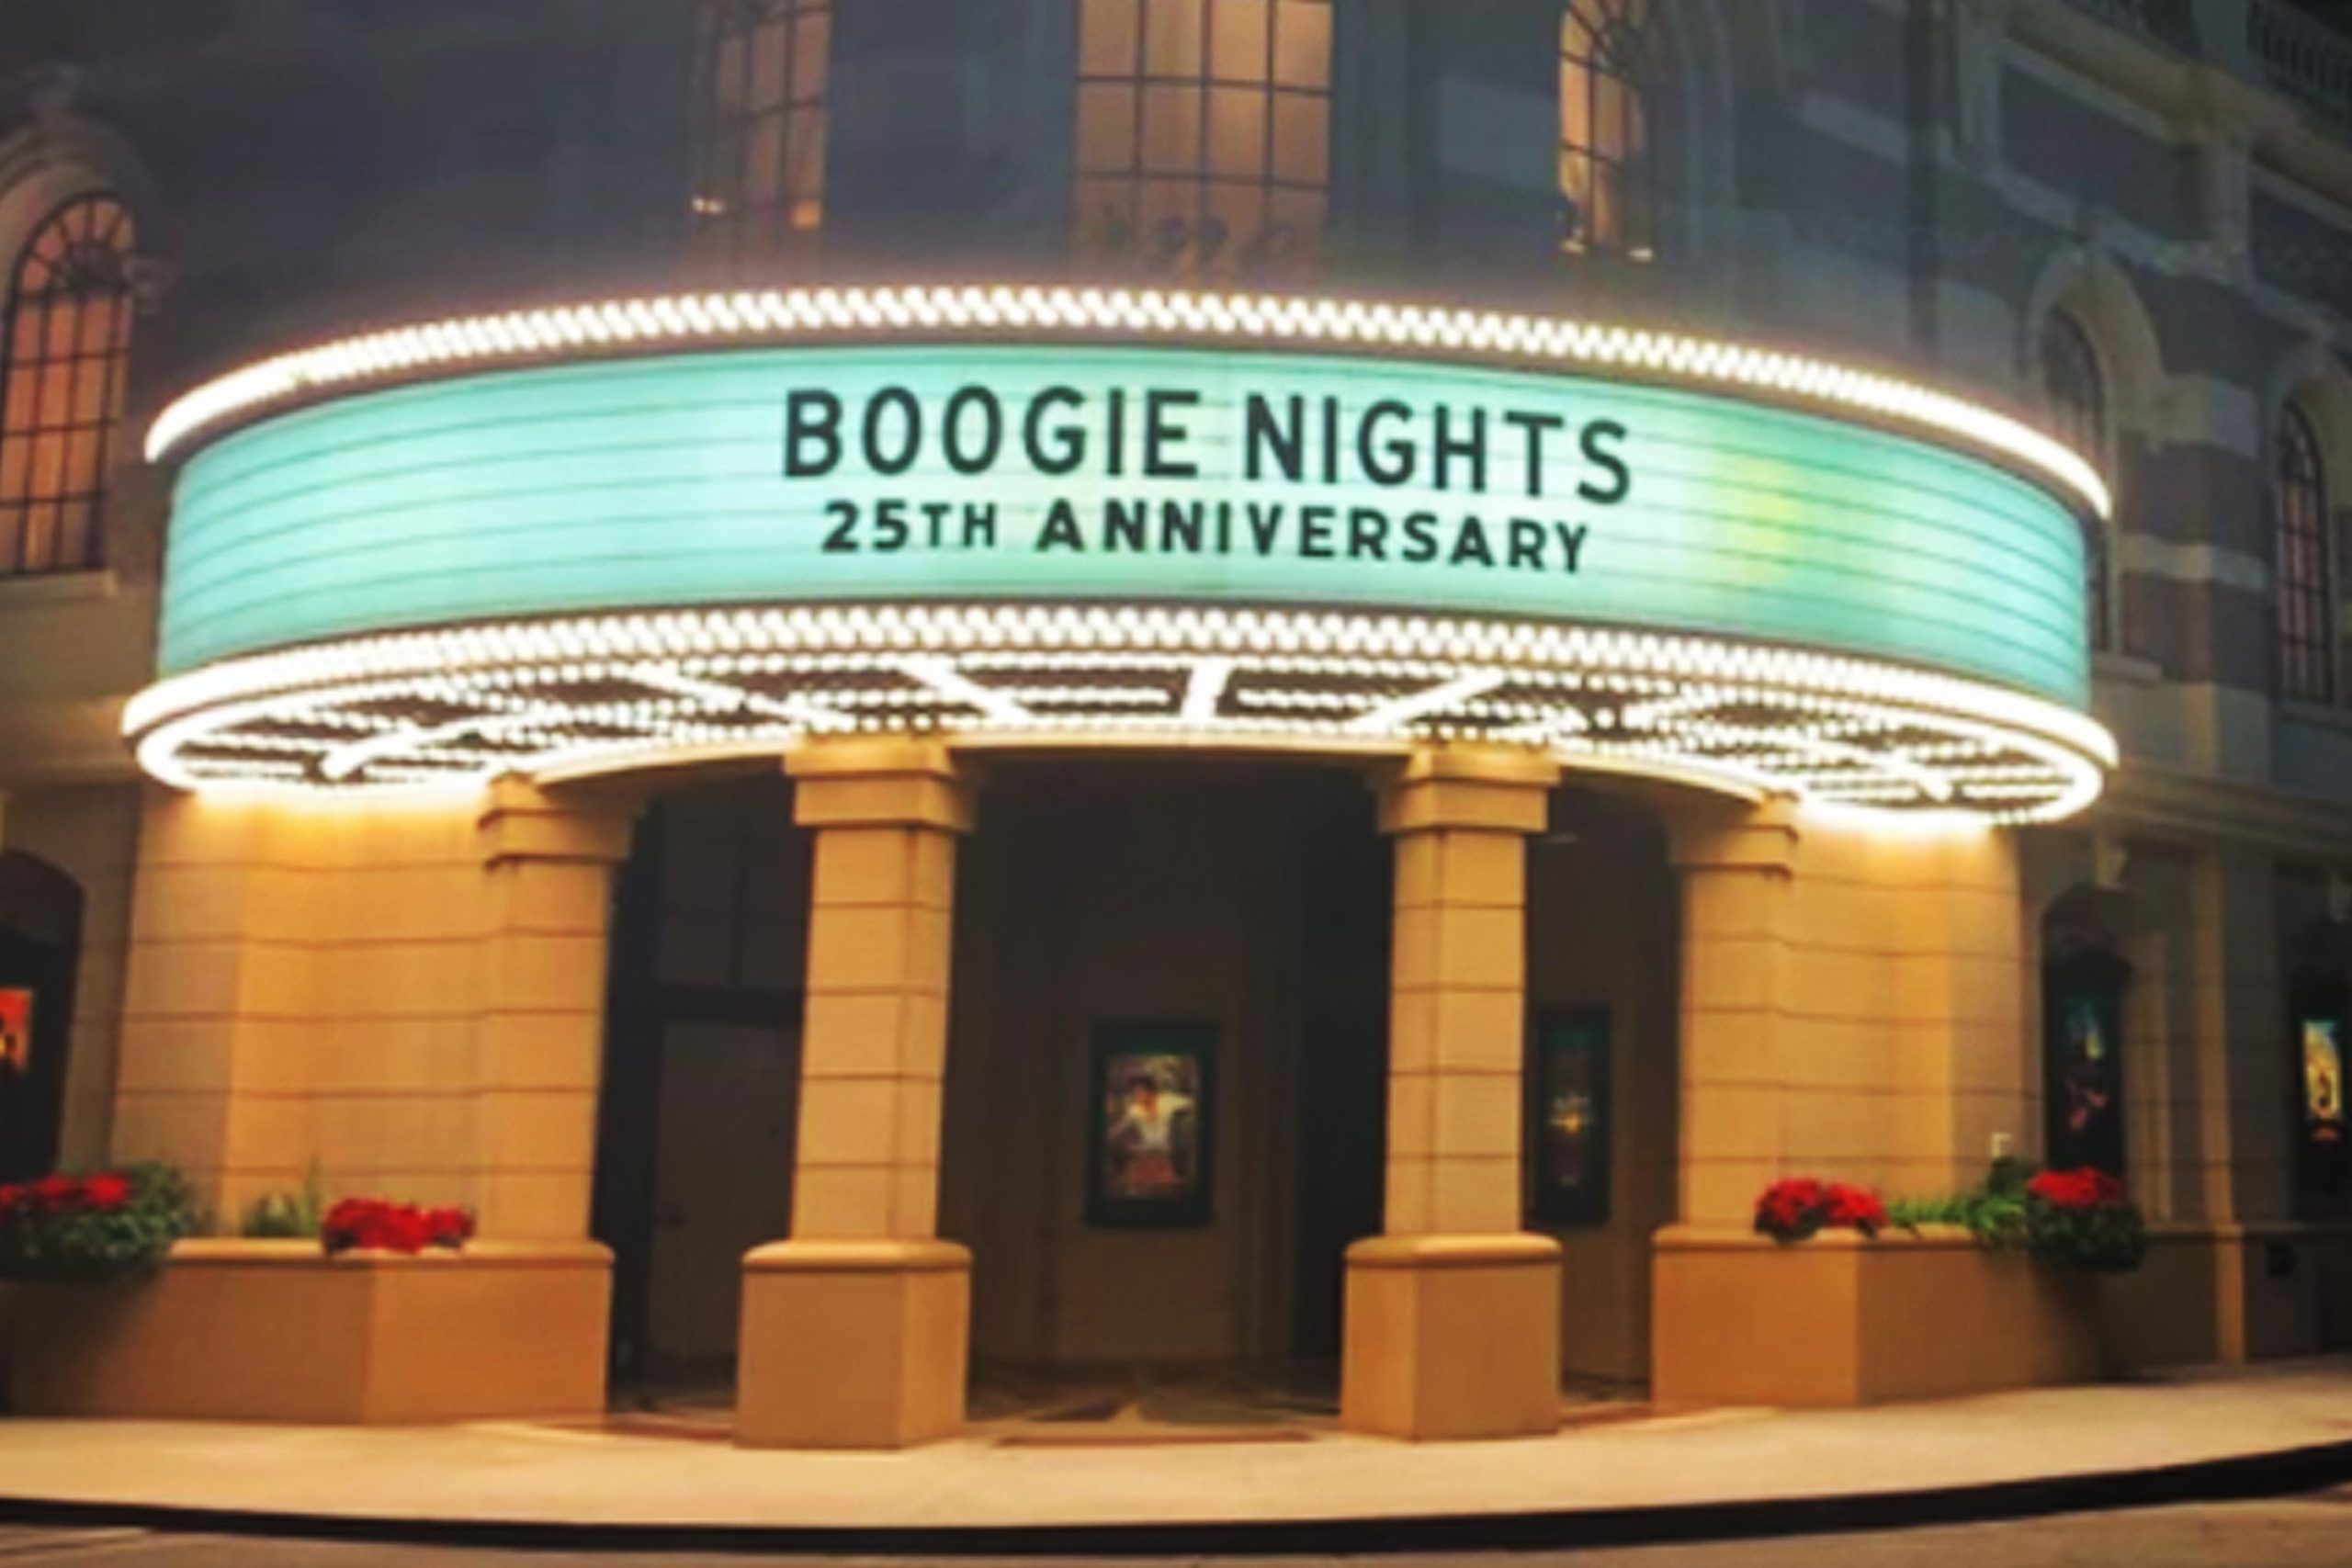 Boogie nights 25th anniversary